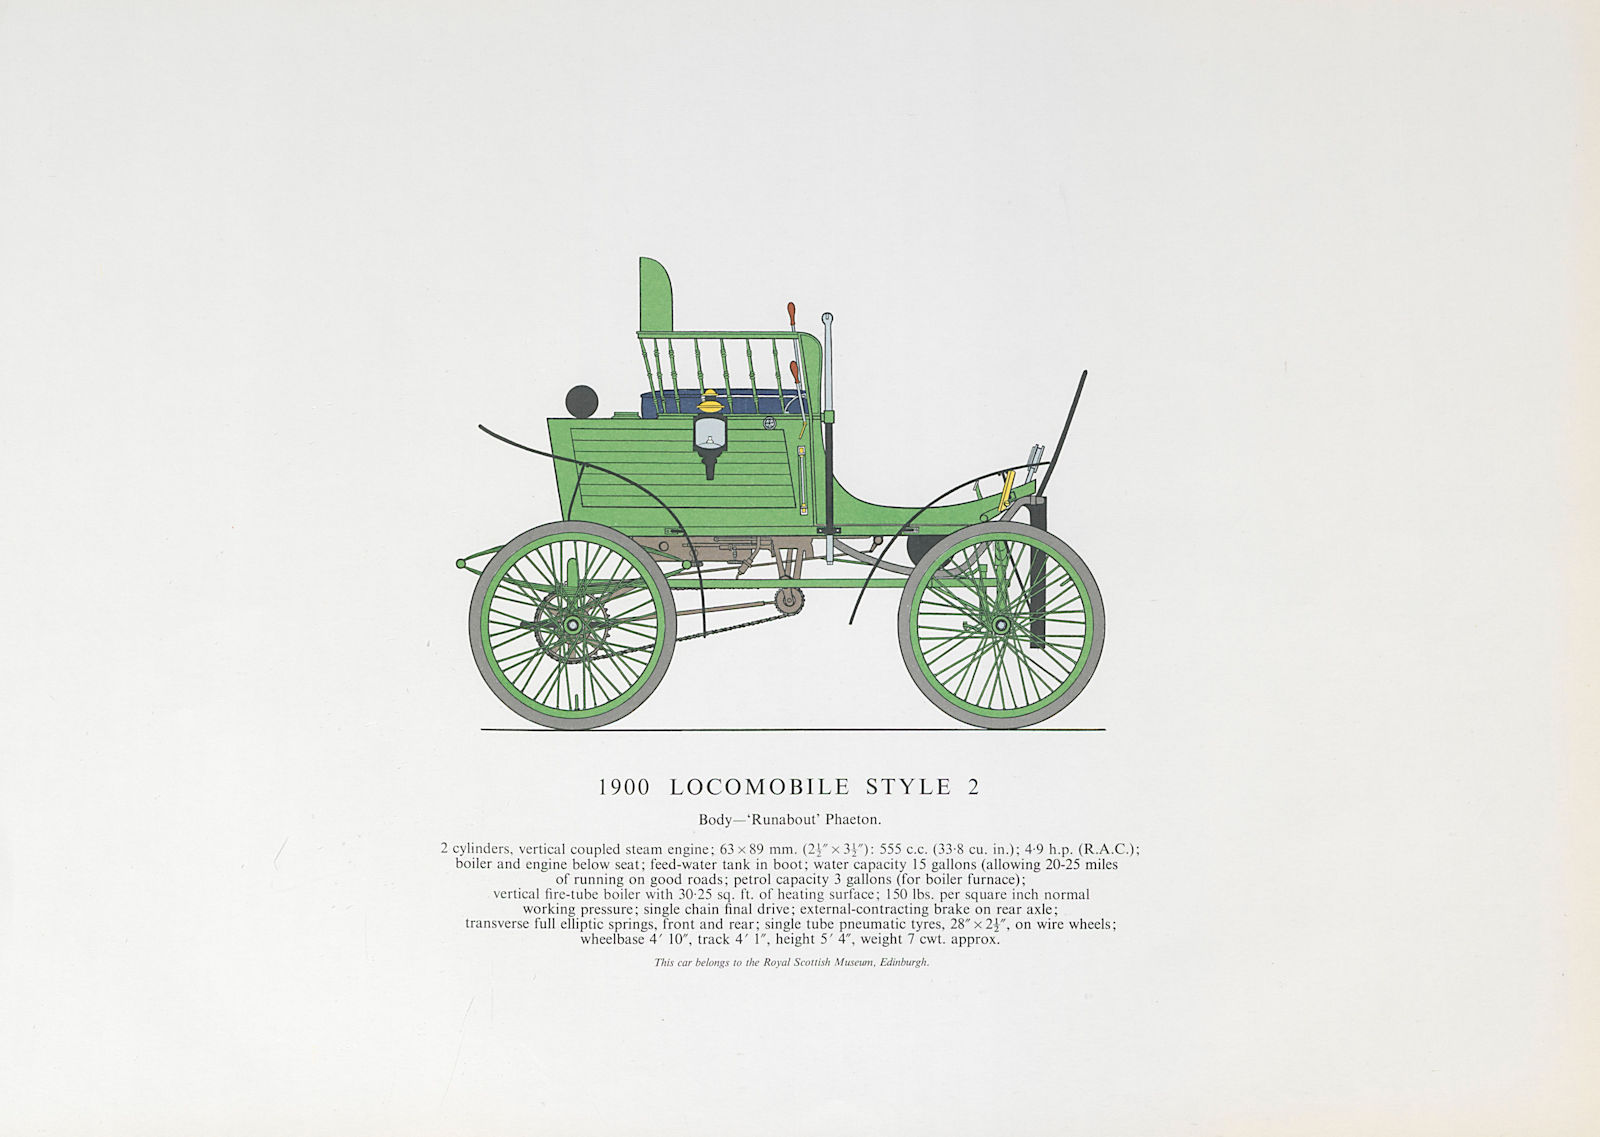 Locomobile Style 2 "Runabout" Phaeton (1900) car print. George Oliver. USA 1966